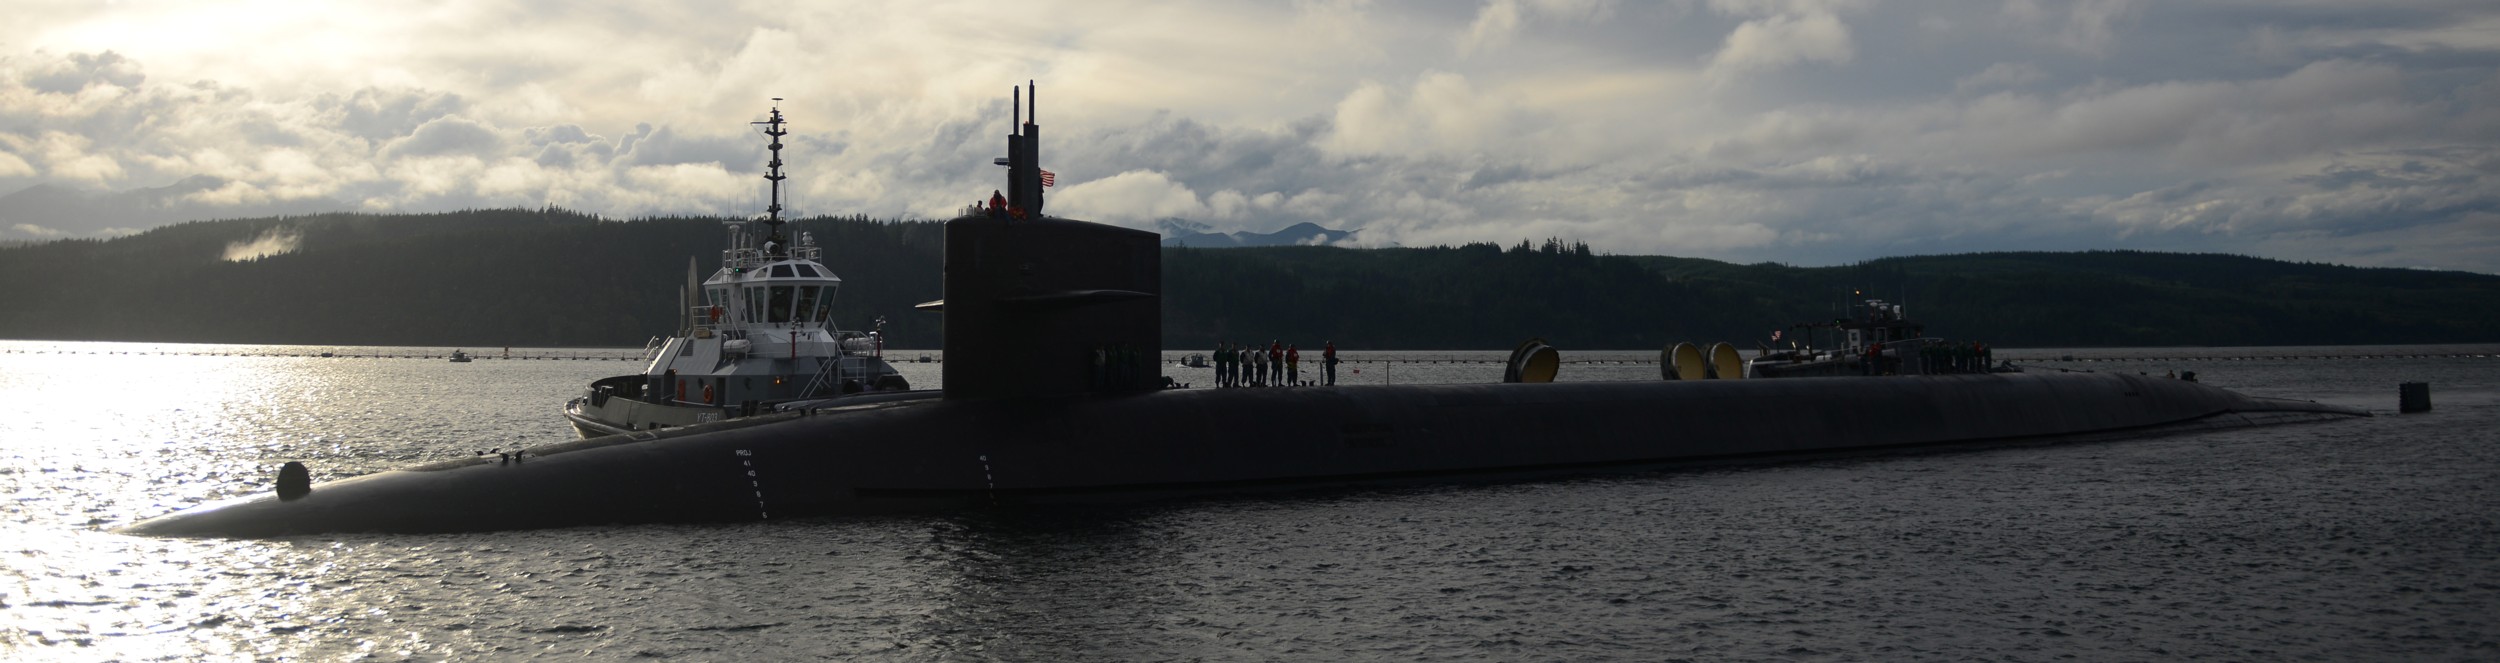 ssbn-731 uss alabama ohio class ballistic missile submarine 2013 14 kitsap bangor bremerton